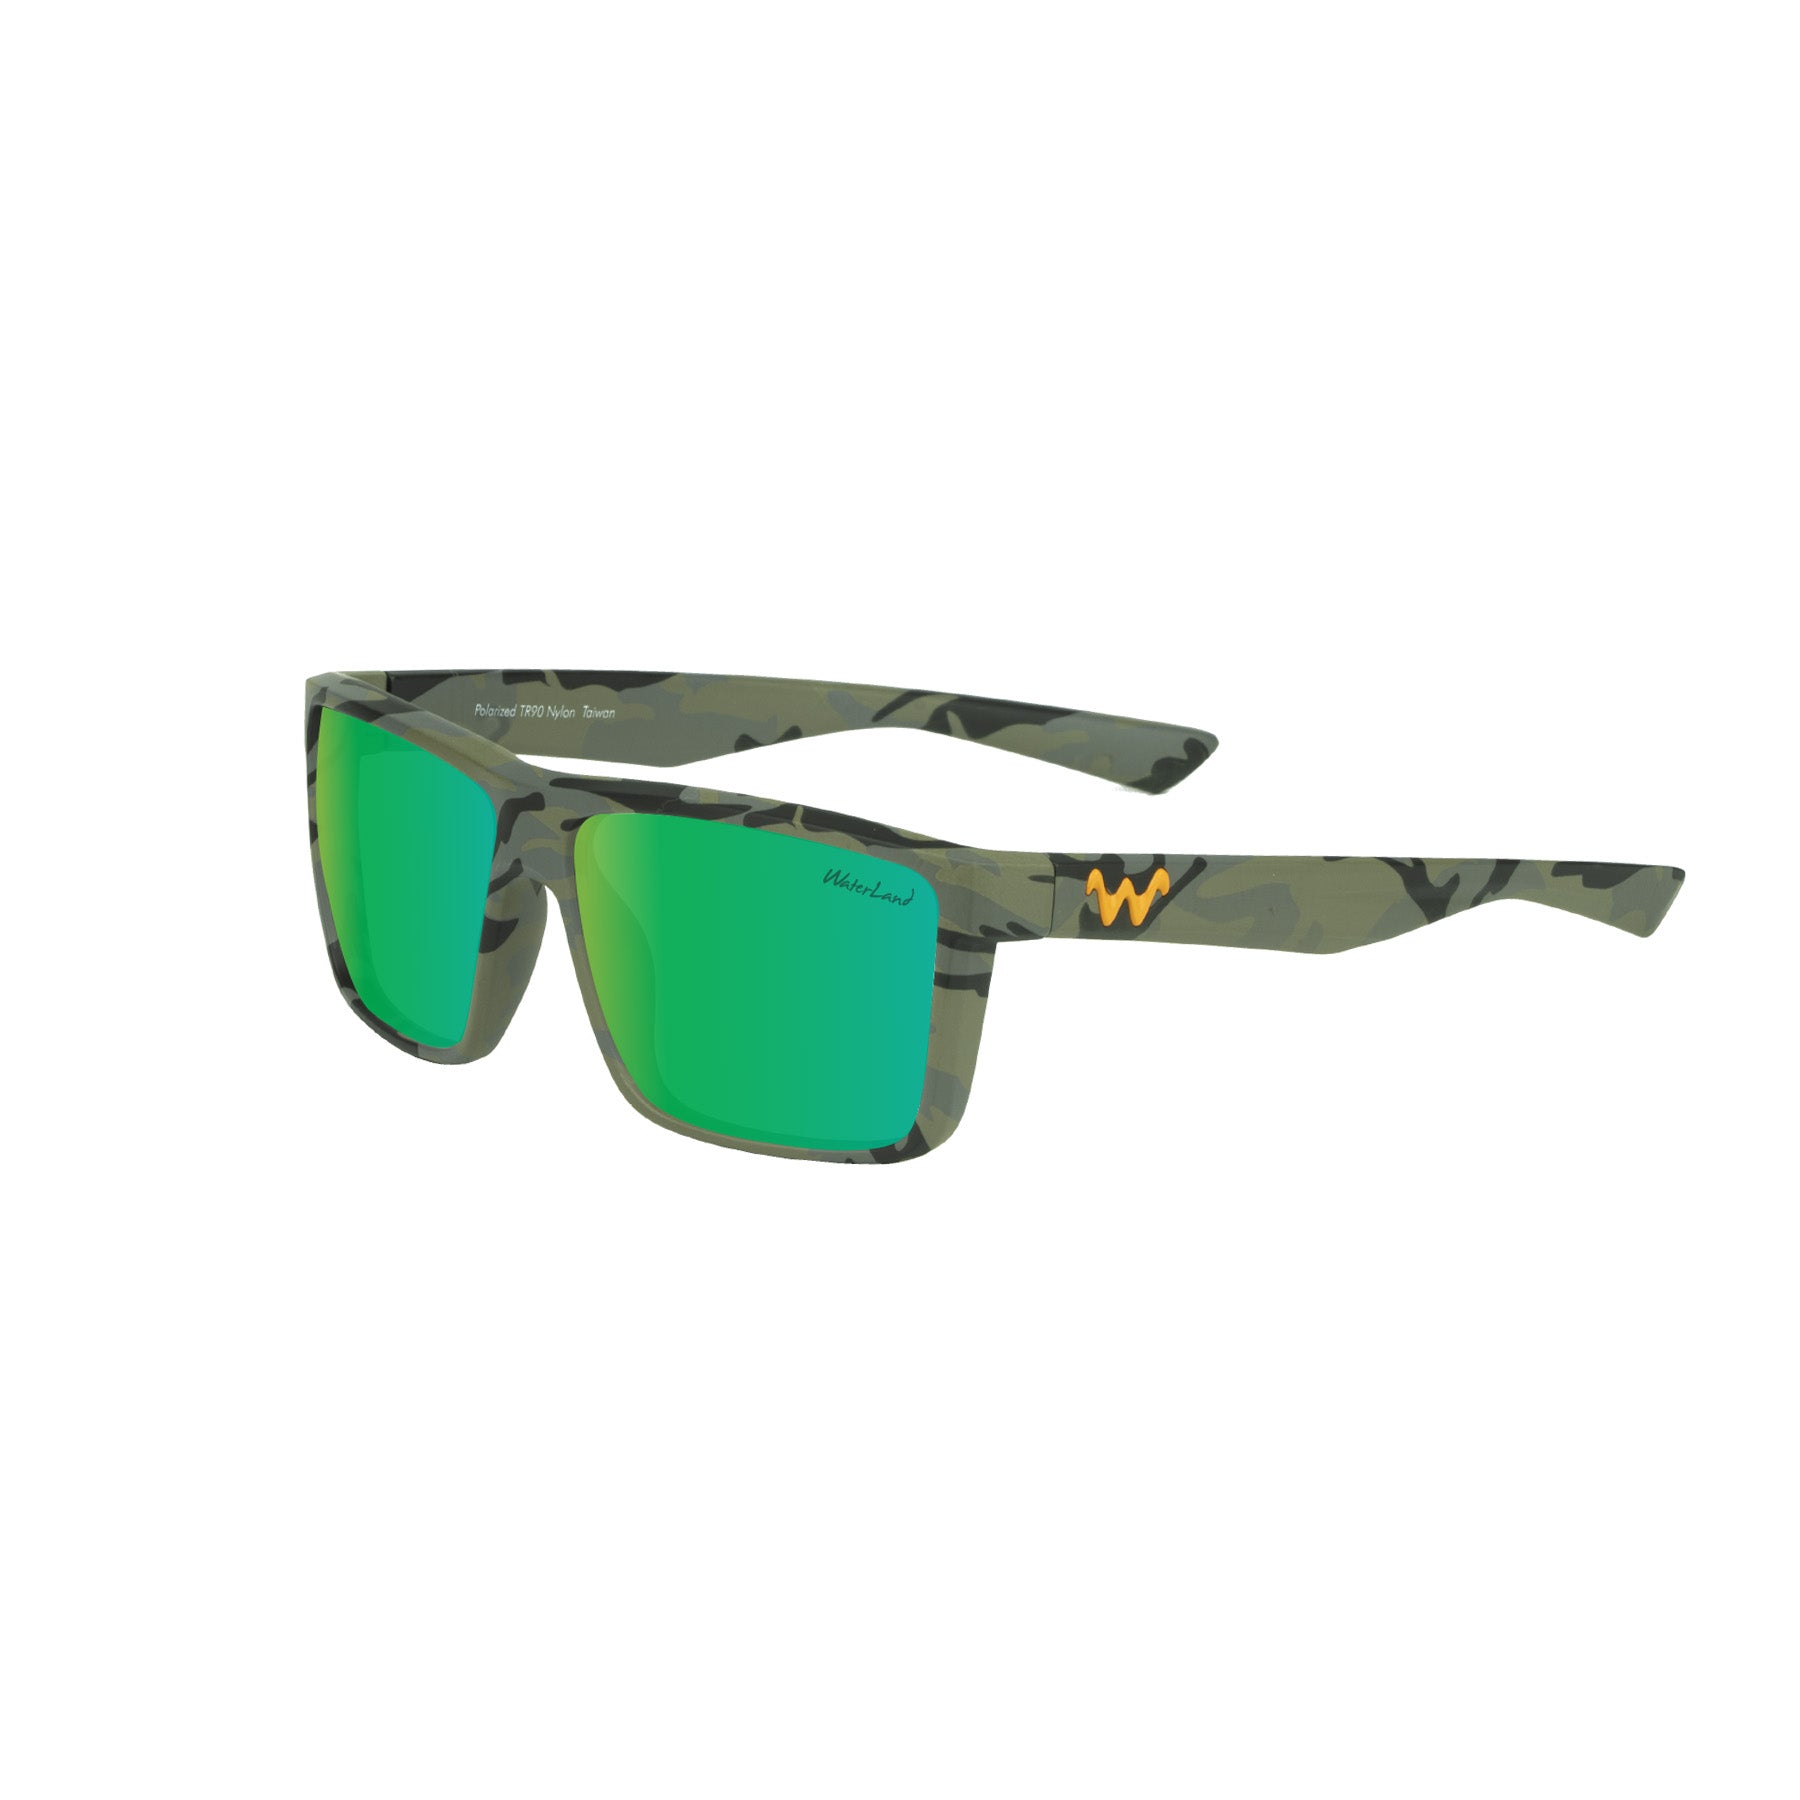 Waterland Polarized Sunglasses - Slaunch - Ops Camo